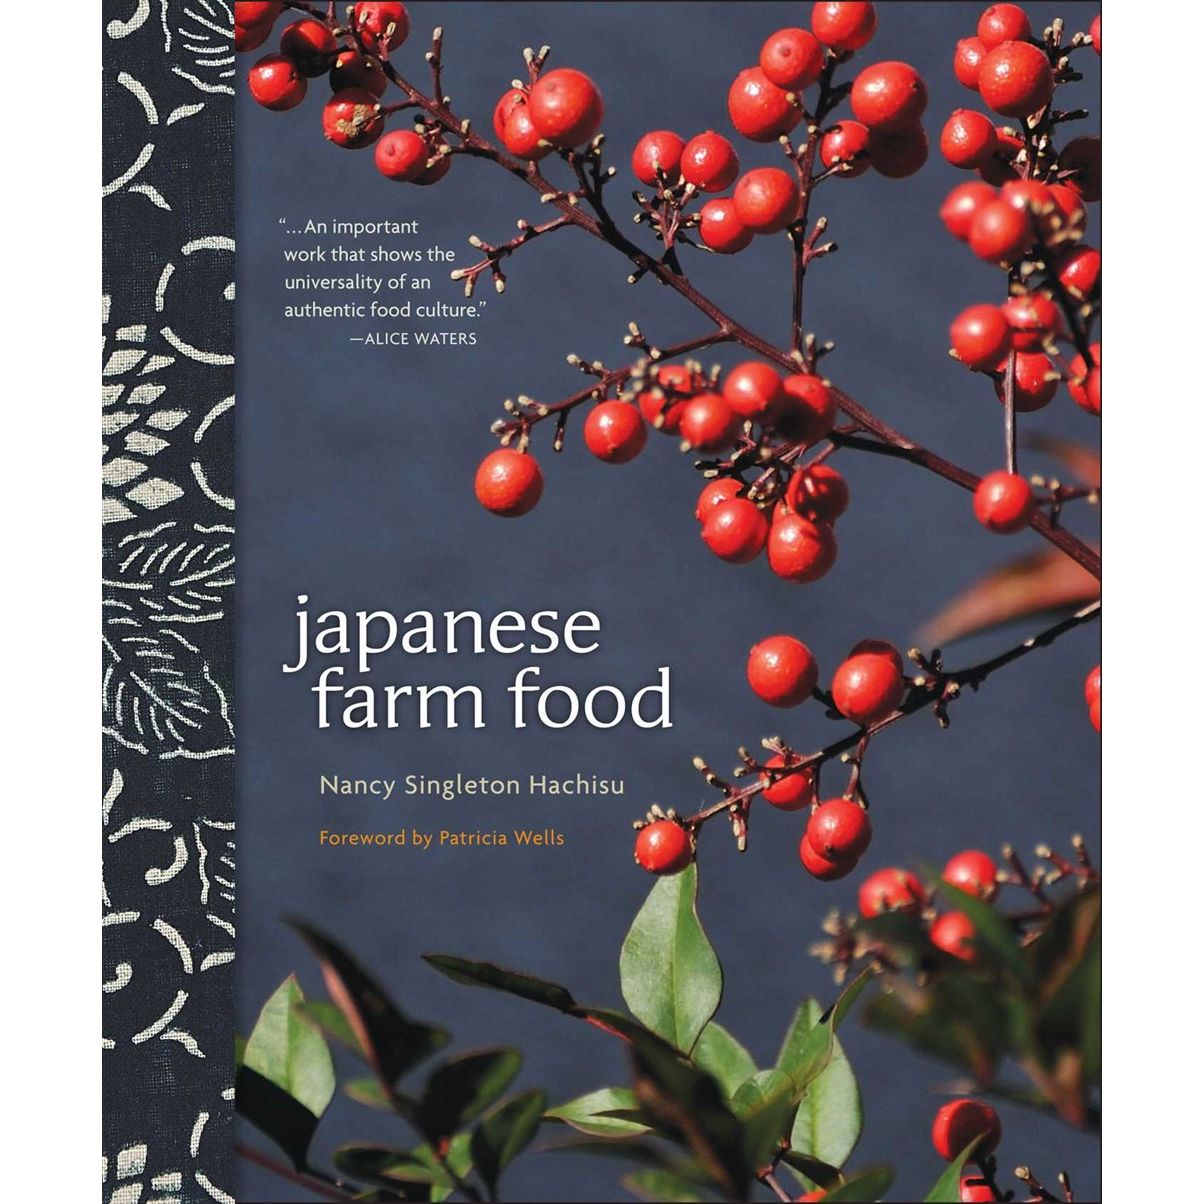 Japanese Farm Food (Nancy Singleton Hachisu)